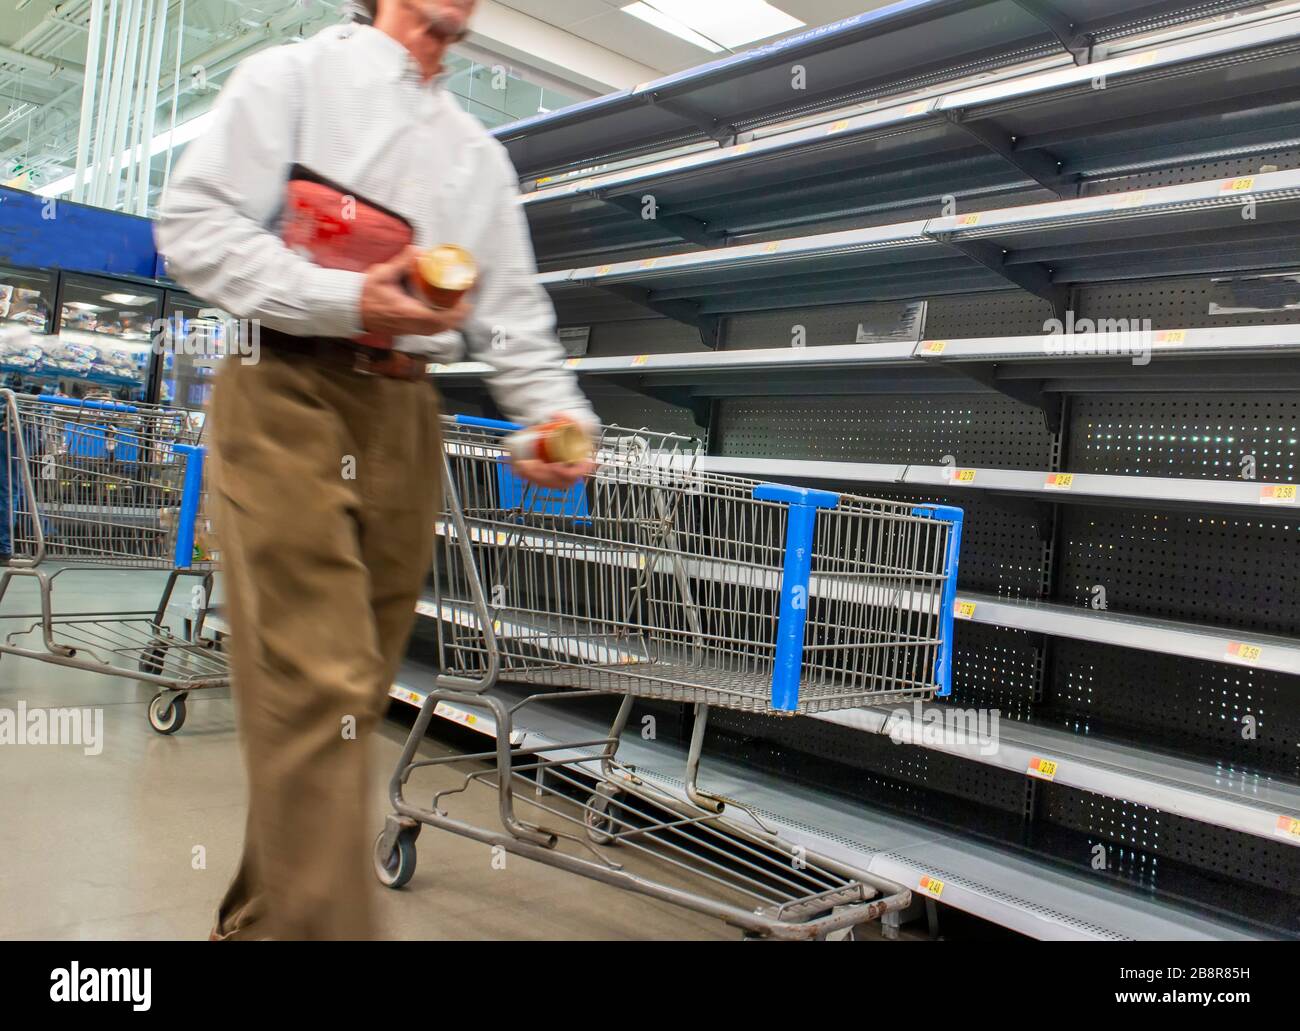 Coronavirus related sign rationing food at a supermarket Stock Photo